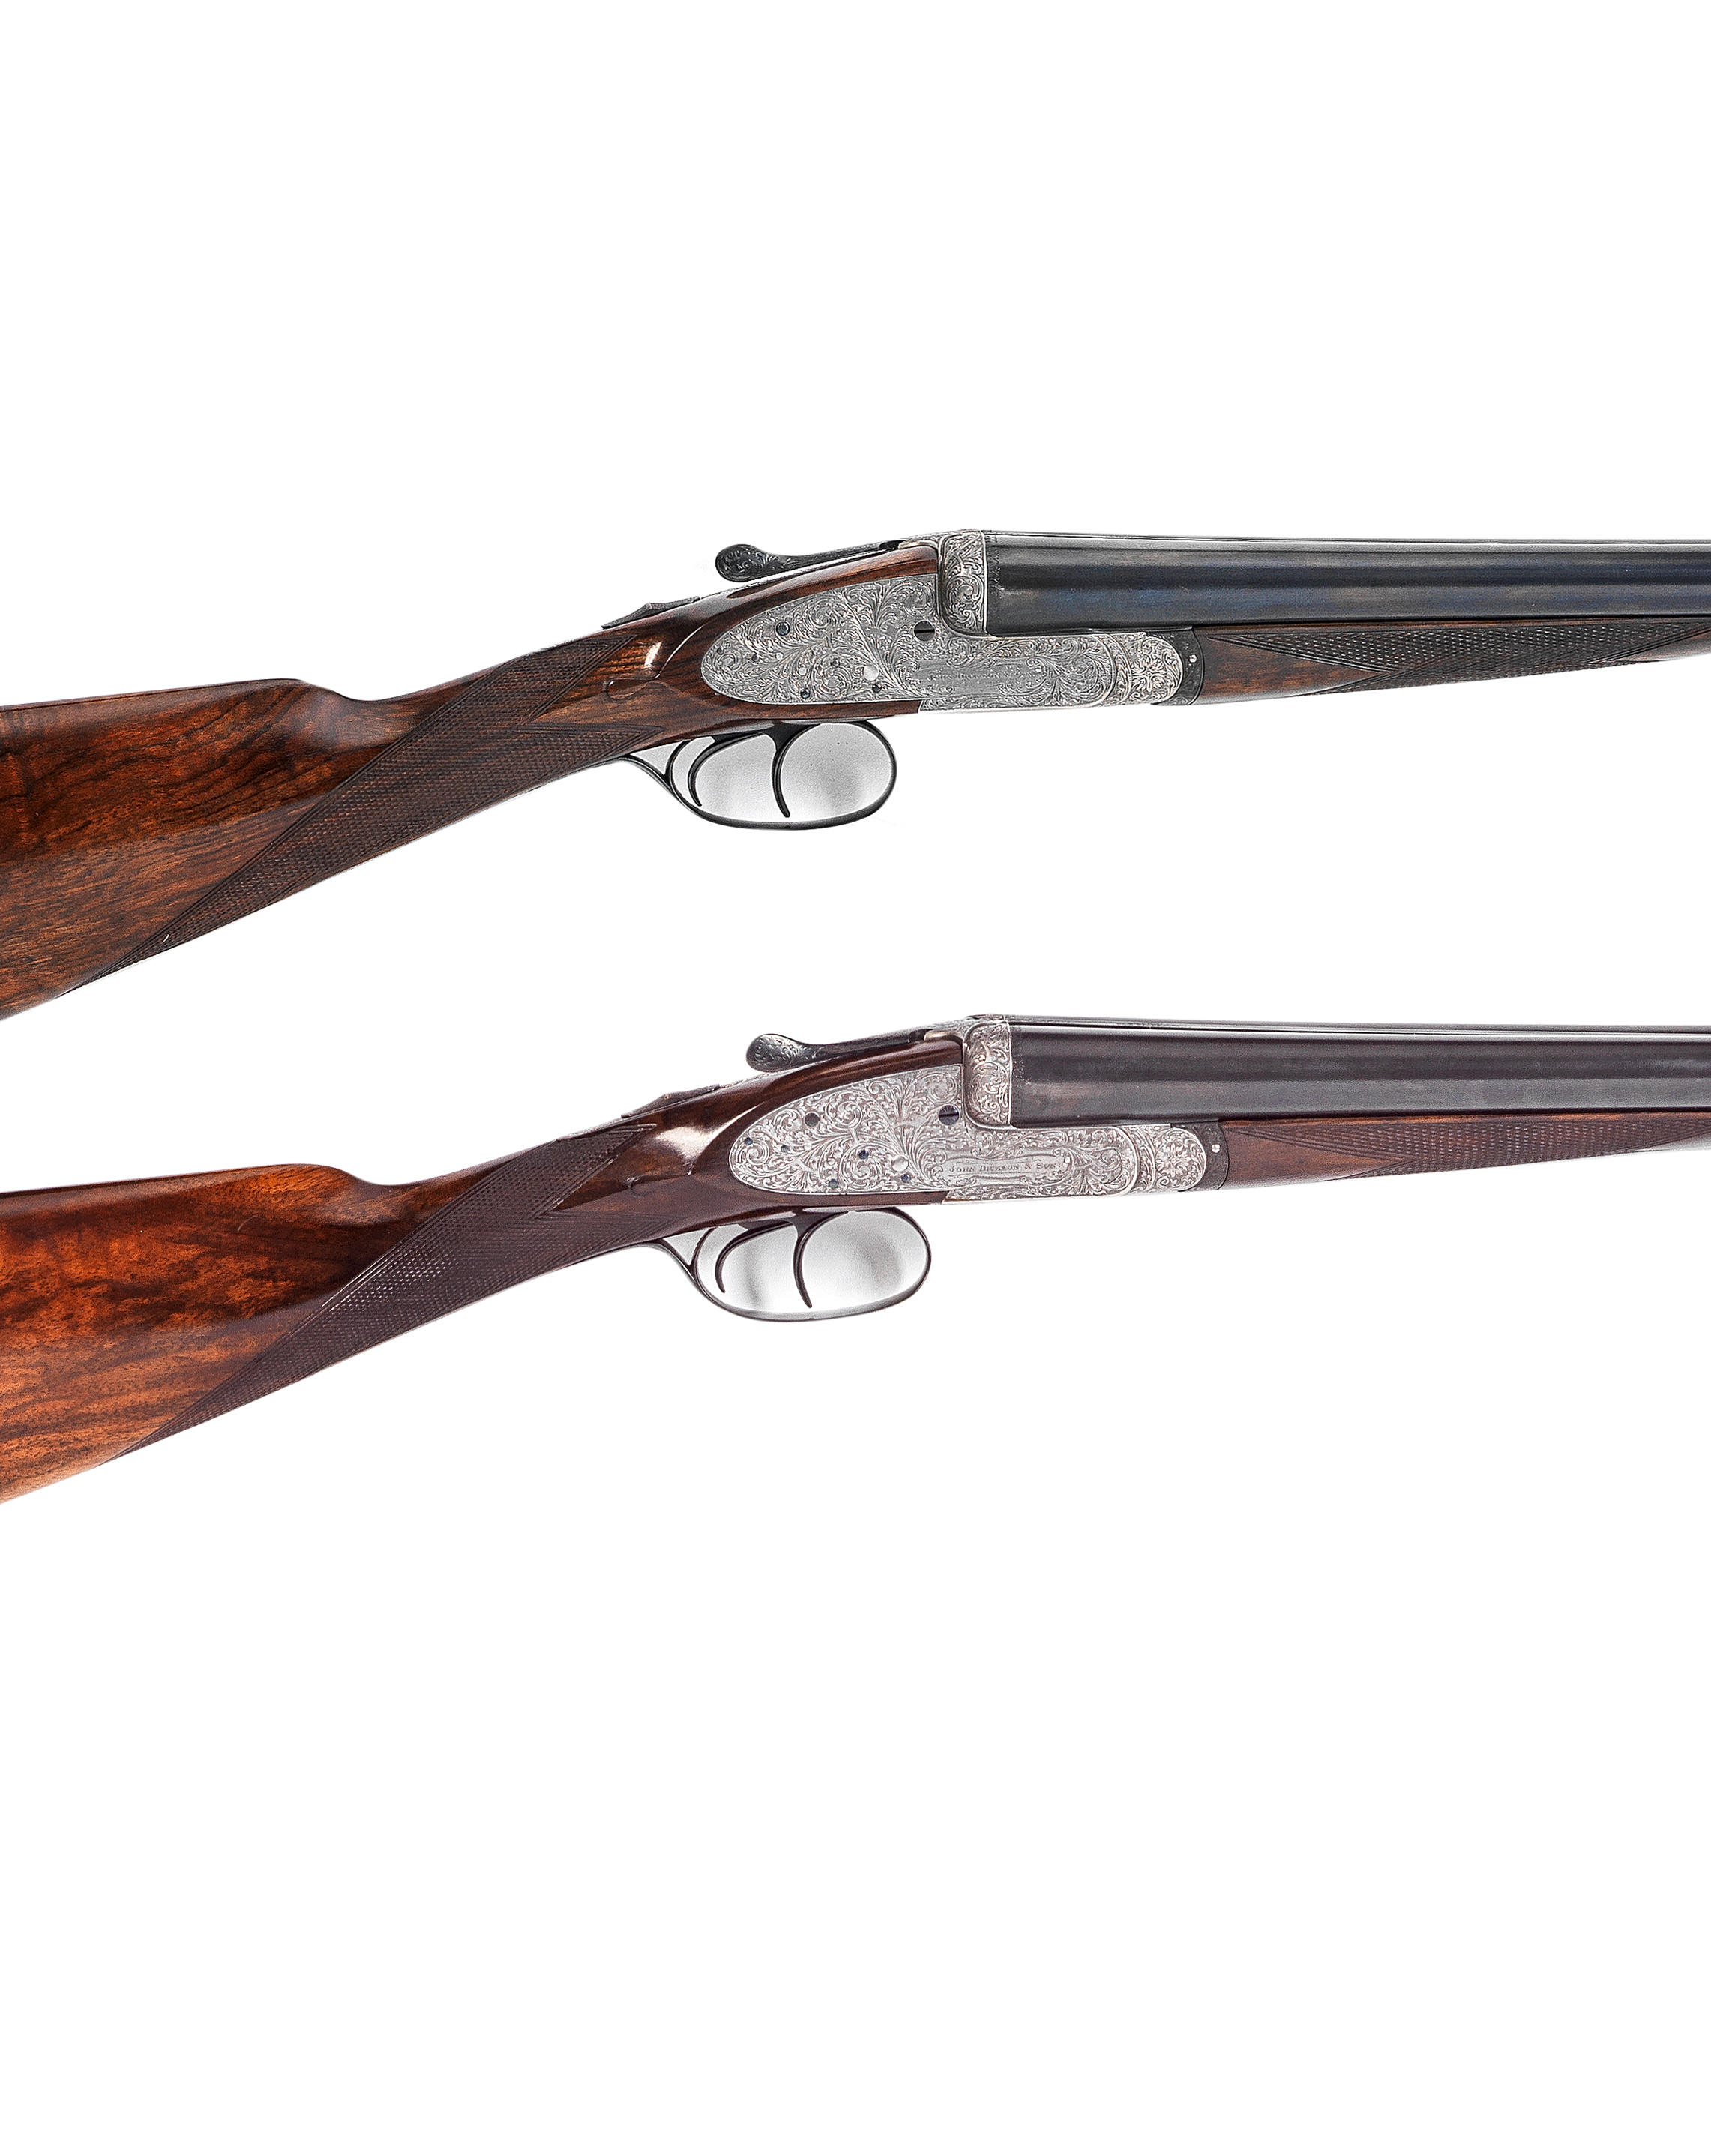 Bonhams Cars : Remington Model 870 Magnum Ducks Unlimited Edition 12 Gauge  Shotgun Modern firearm